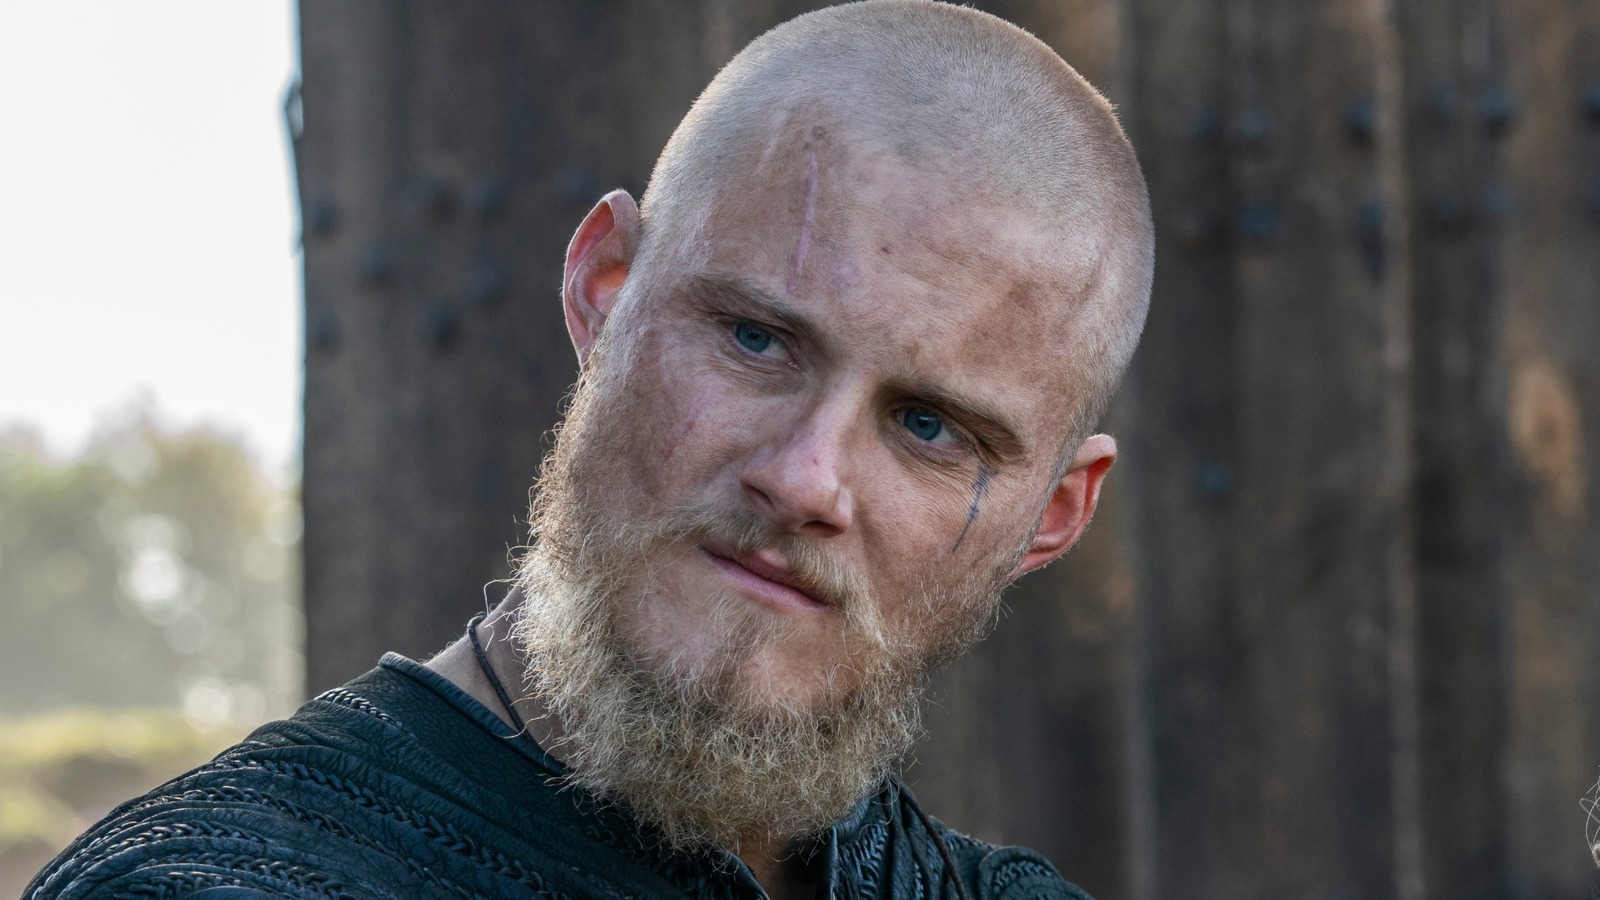 Vikings star Alexander Ludwig tells us about King Bjorn's last stand